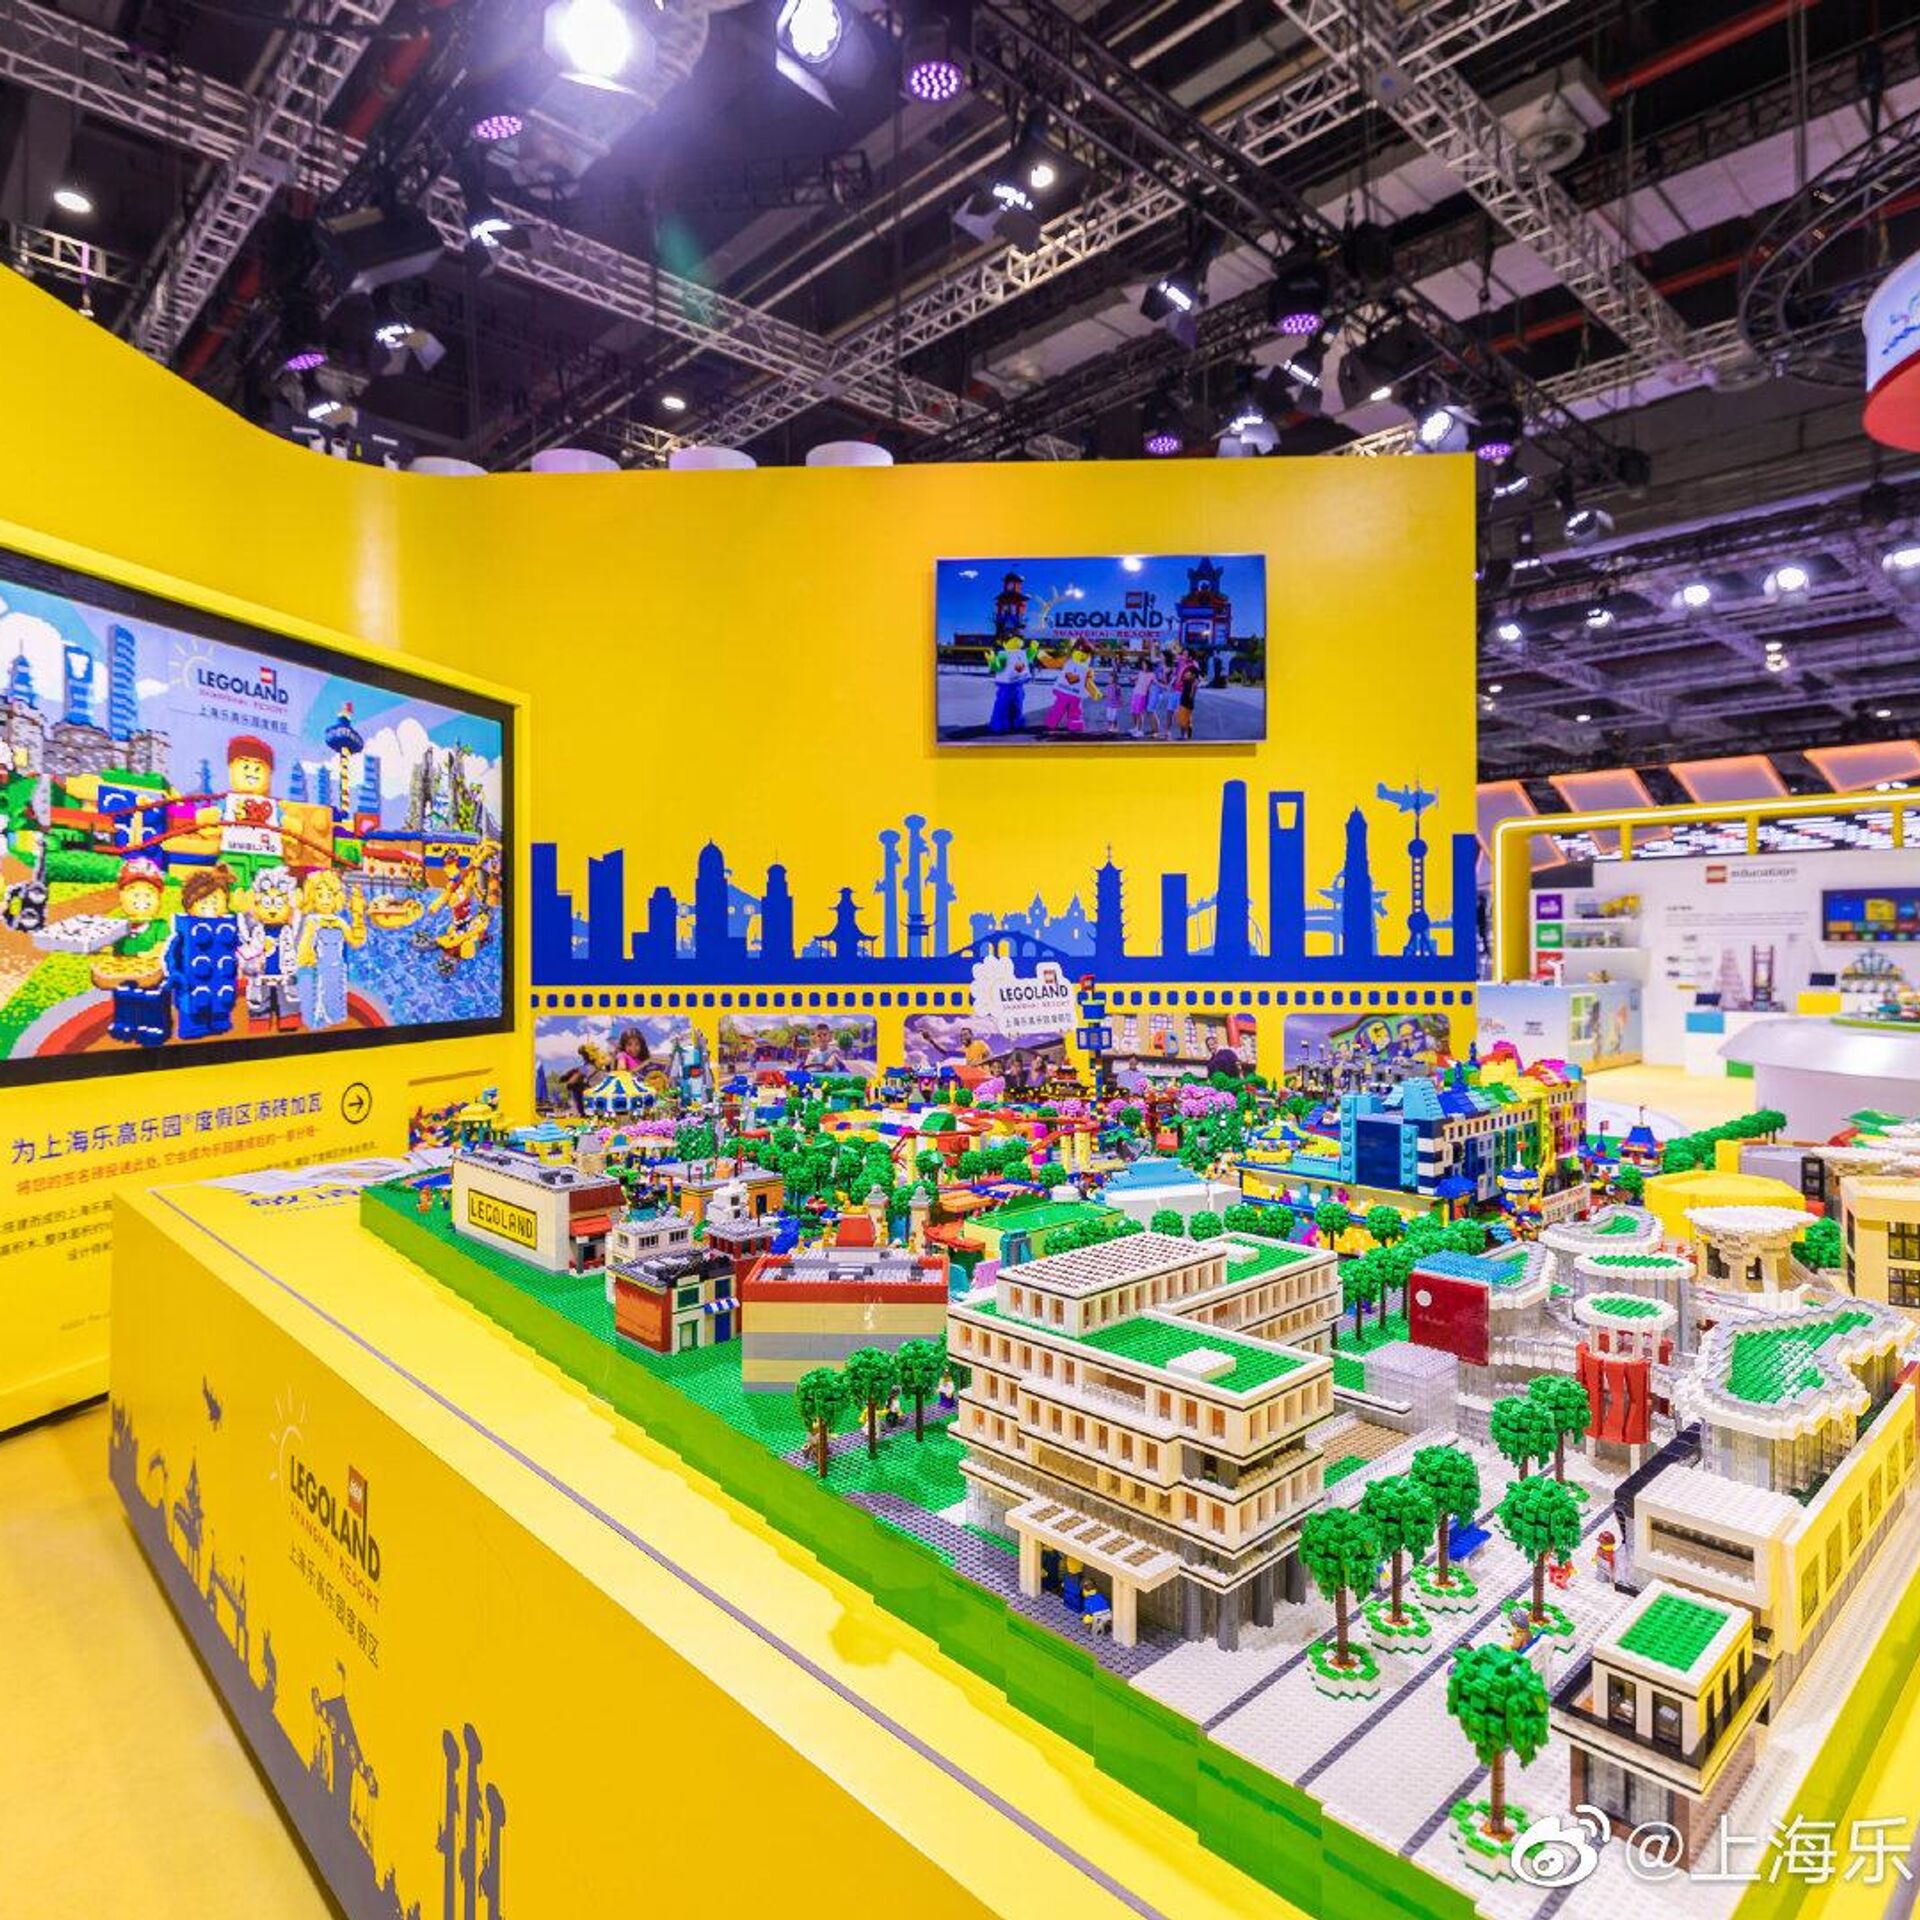 Legoland Shanghai construction updates